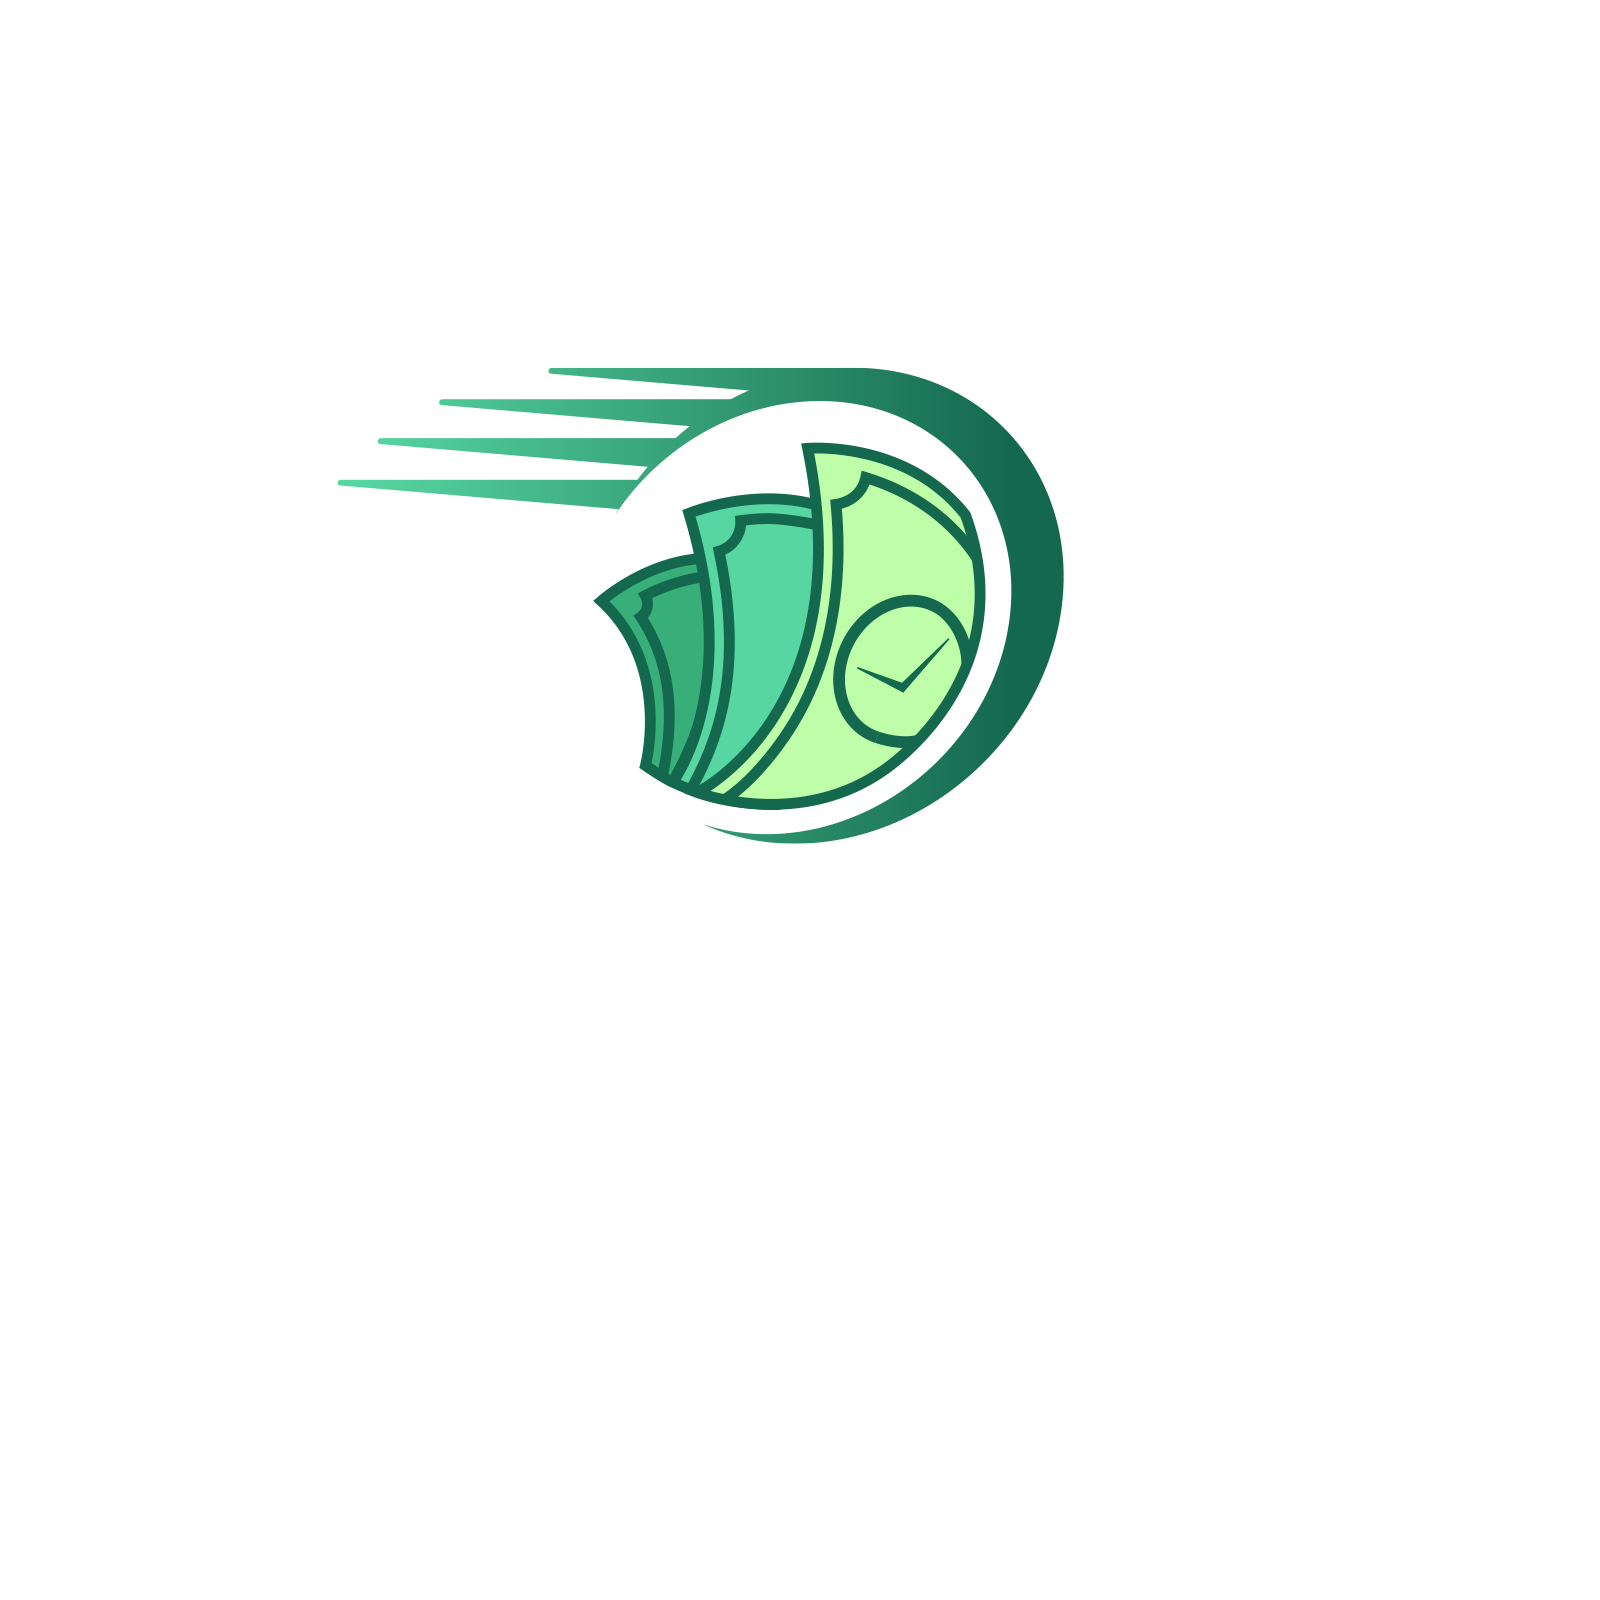 Jhatpatloans